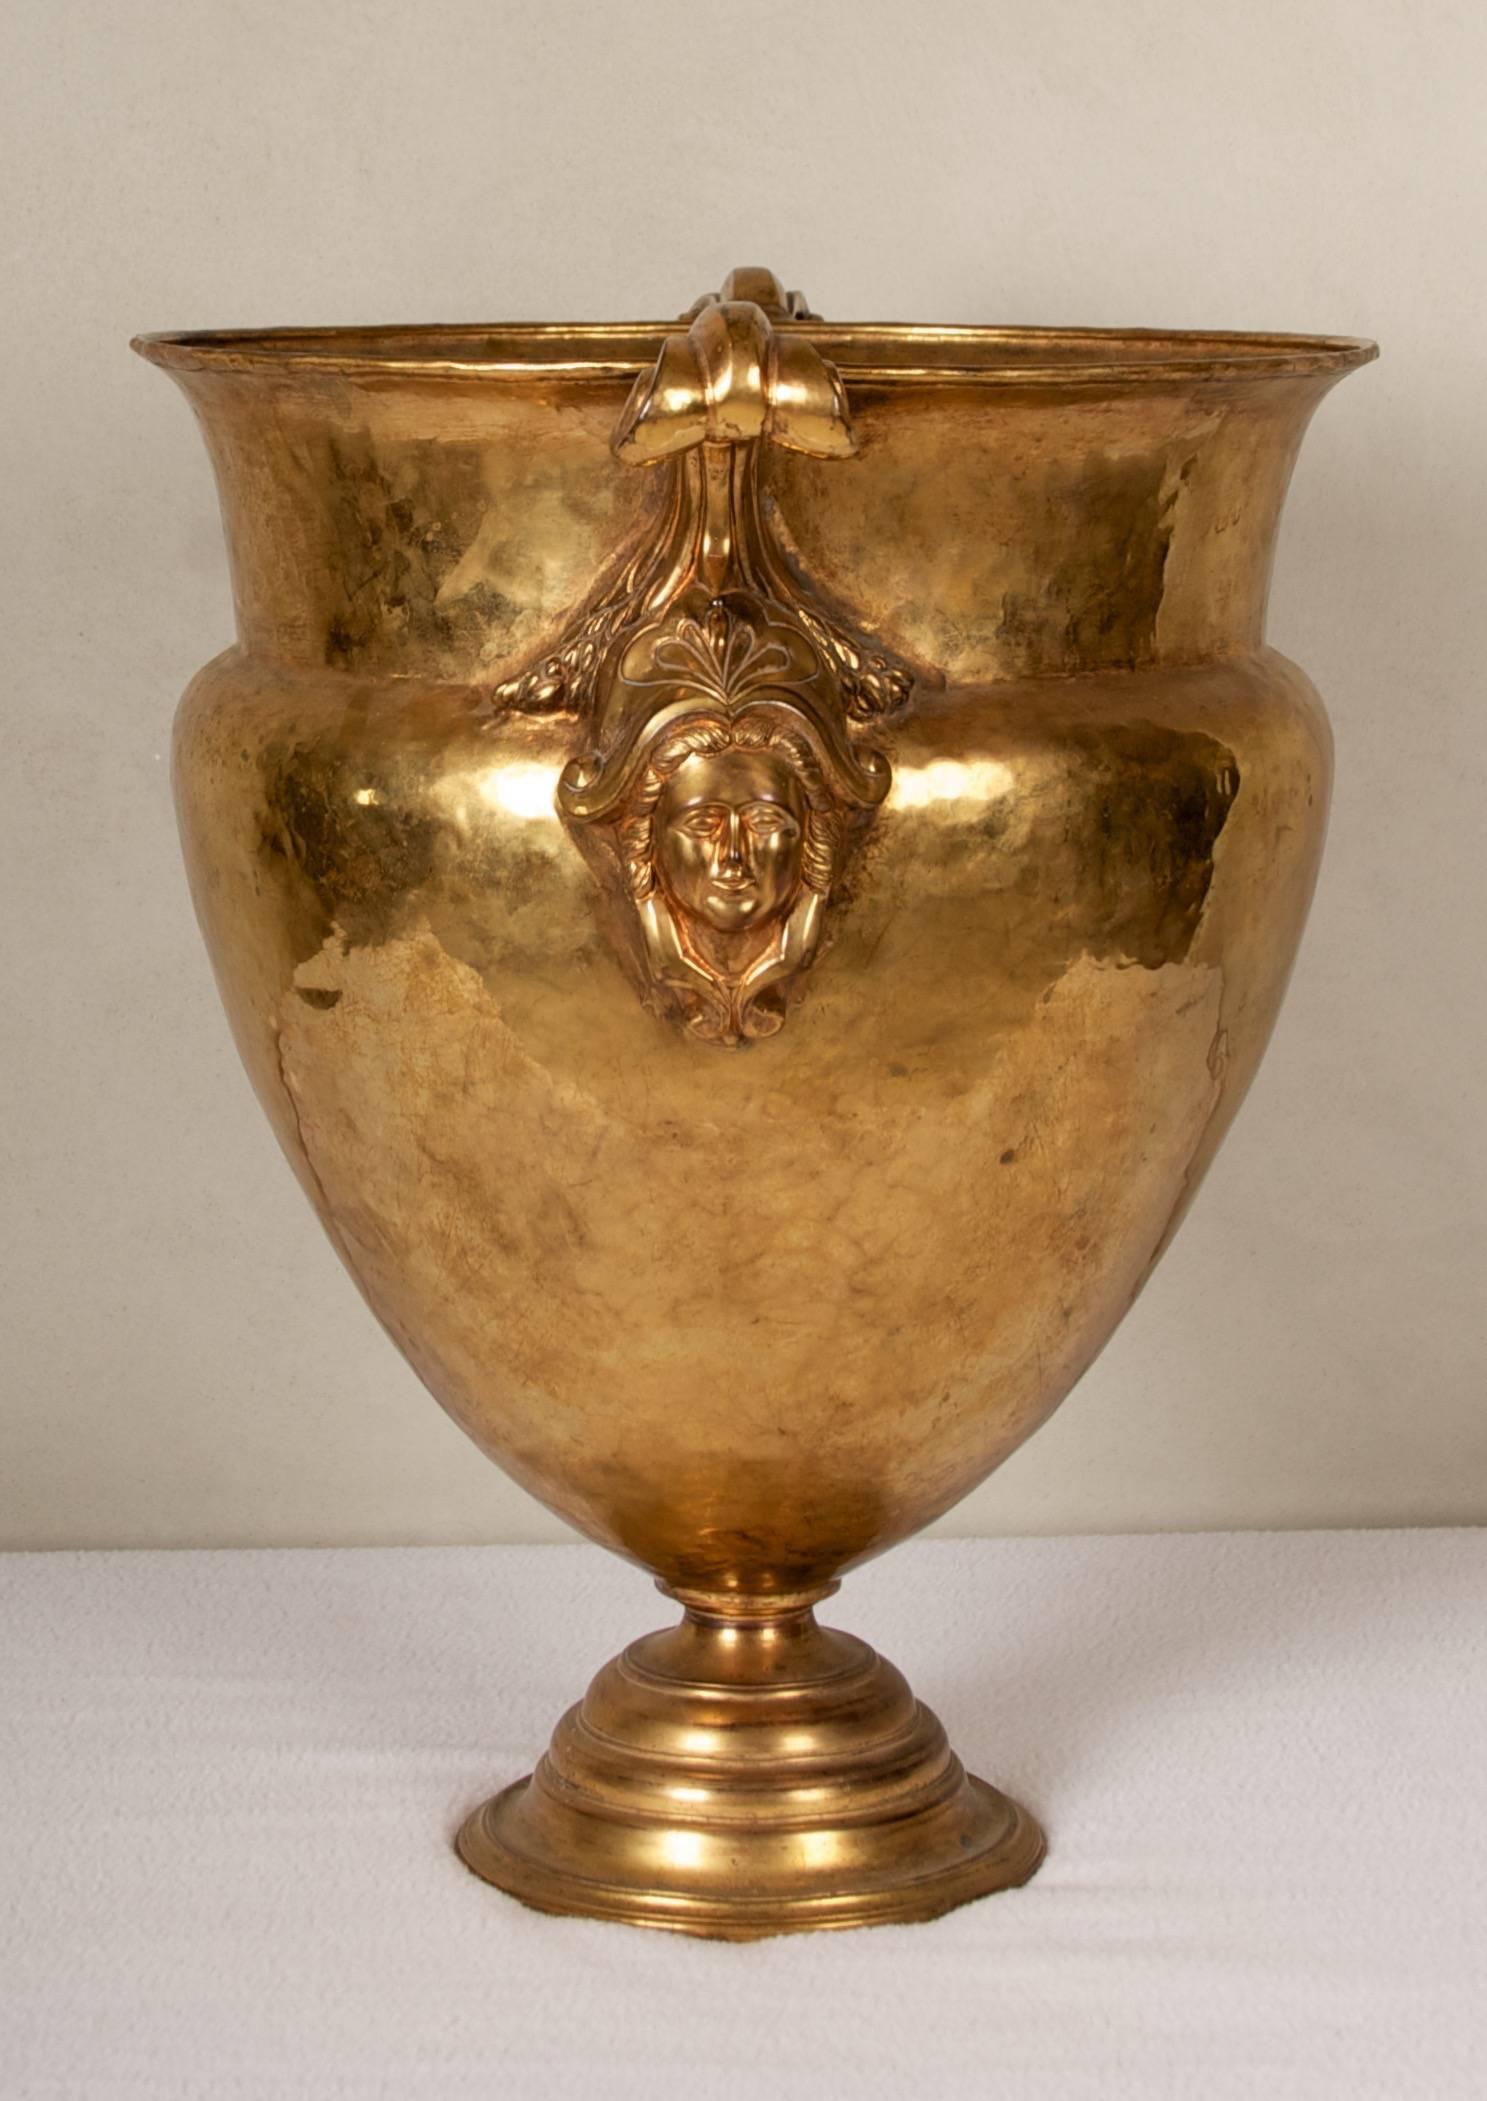 A beautiful large gilded Amphora, a interpretation of a early Roman Amphora,
at the Uffizi in Florenze.